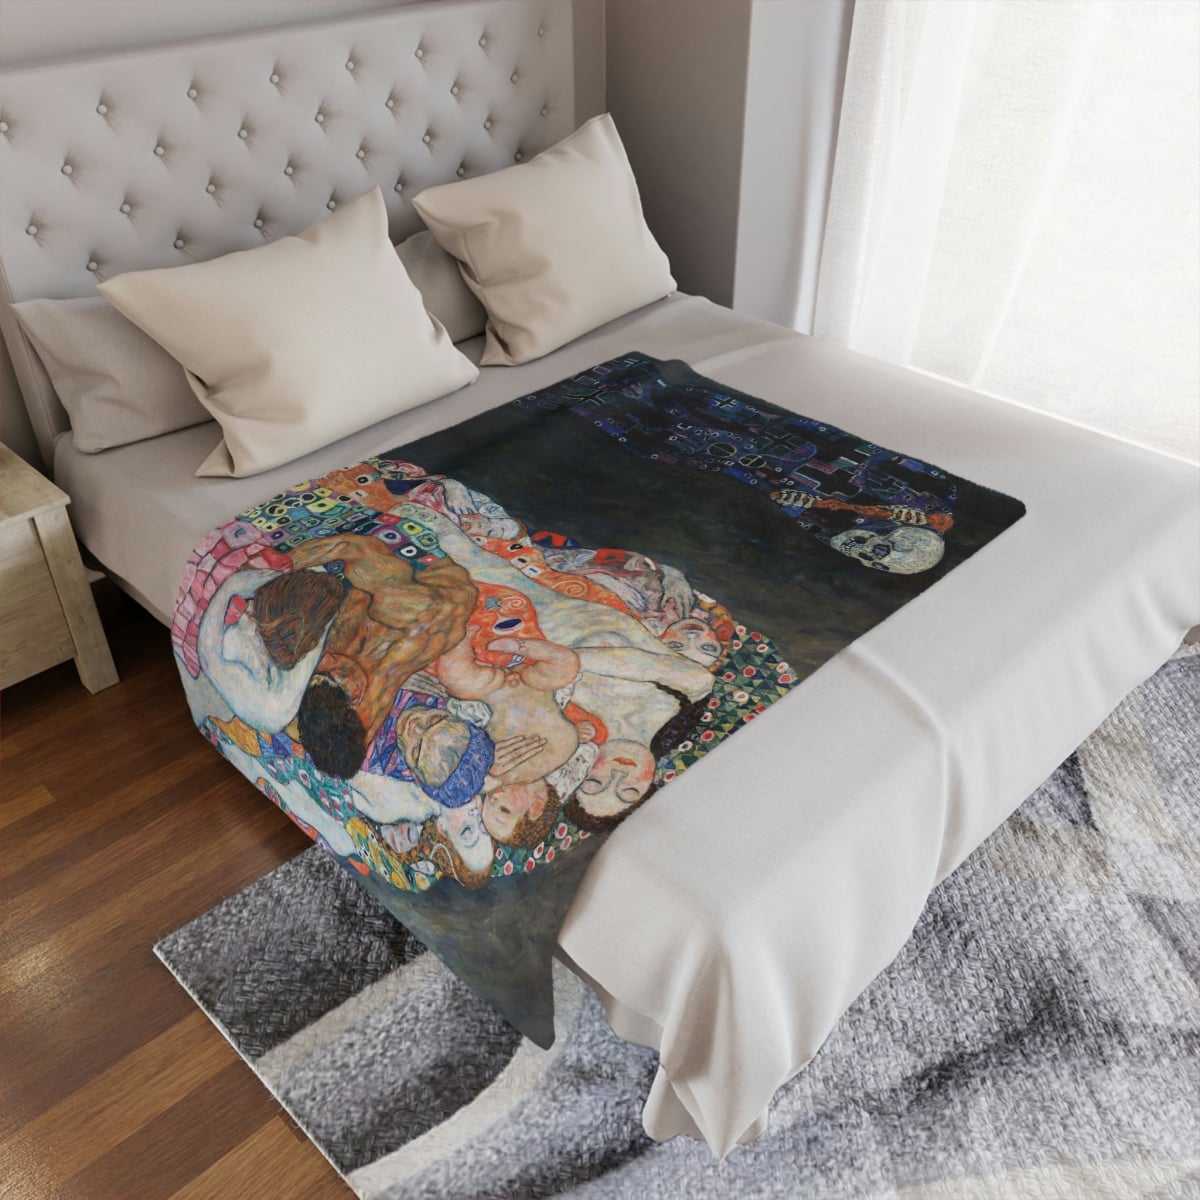 Klimt-themed decorative throw for elegant home interiors